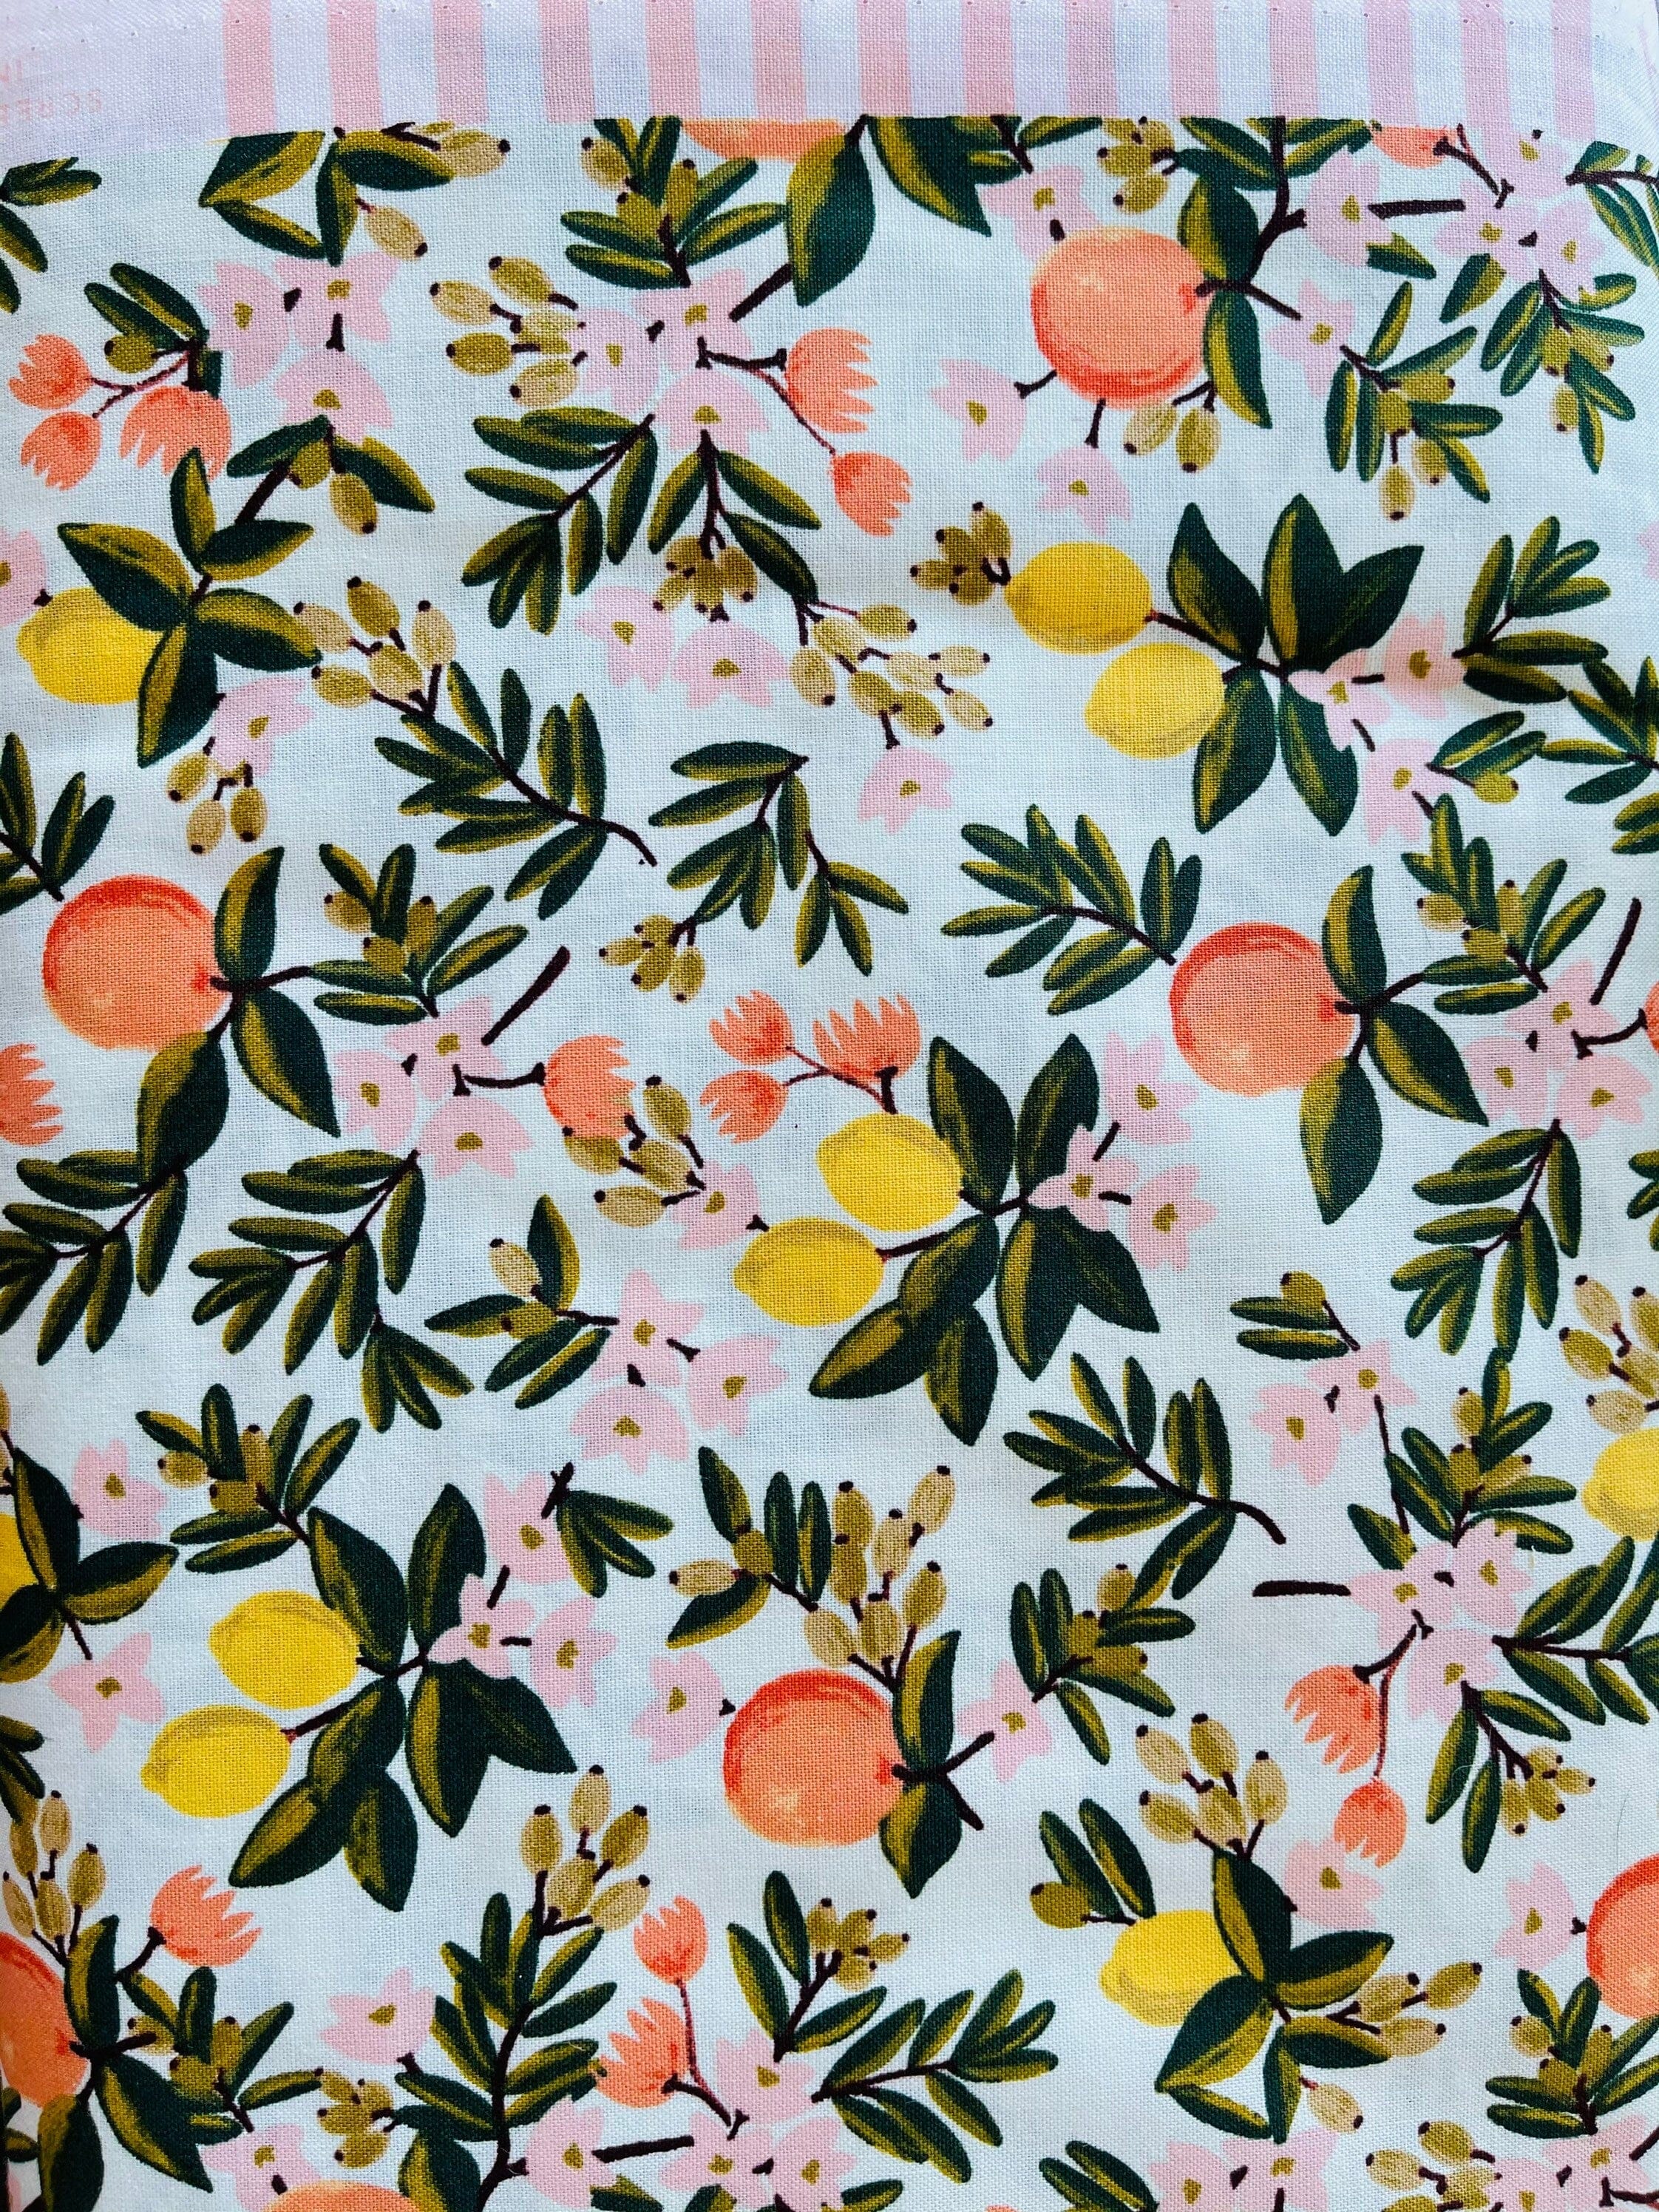 Primavera - Citrus Floral - Mint Fabric - Rifle Paper Co  - Cotton + Steel - Quilting Cotton Fabric - RP300-MI2